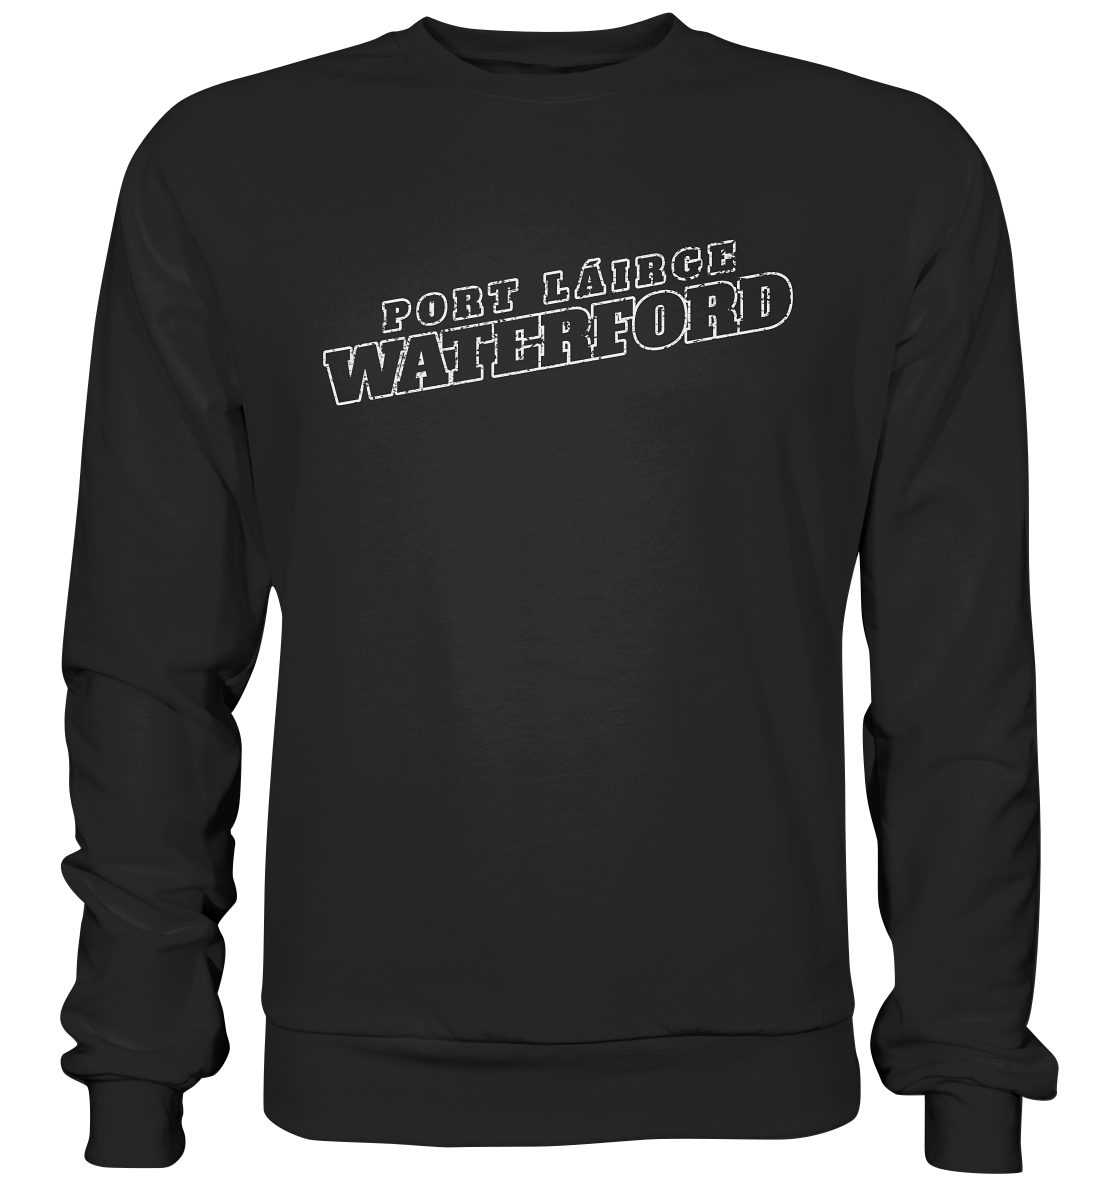 Cities Of Ireland "Waterford" - Premium Sweatshirt